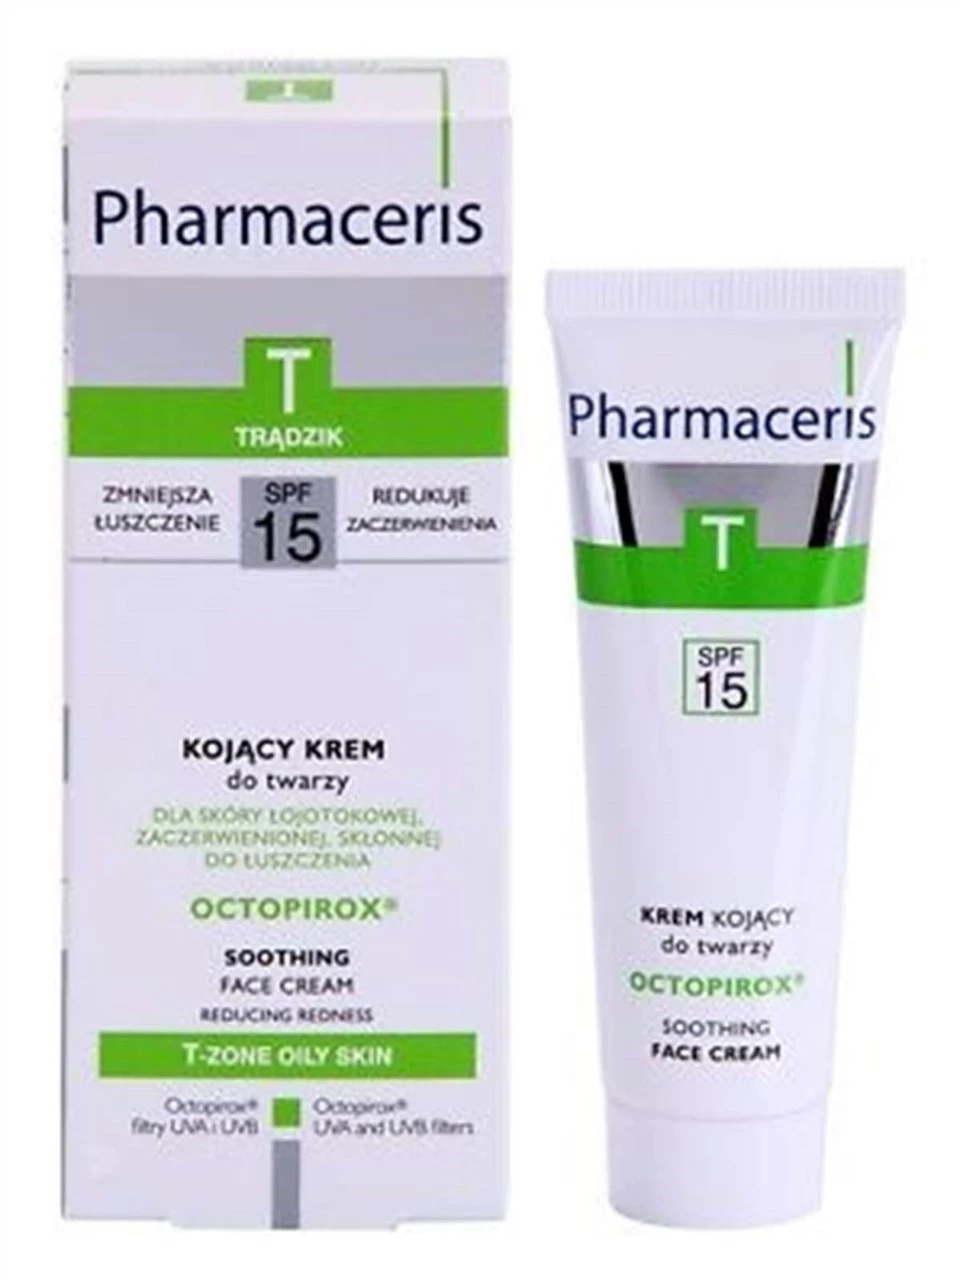 Pharmaceris T Octopirox Soothing Face Cream Spf15 30 ml